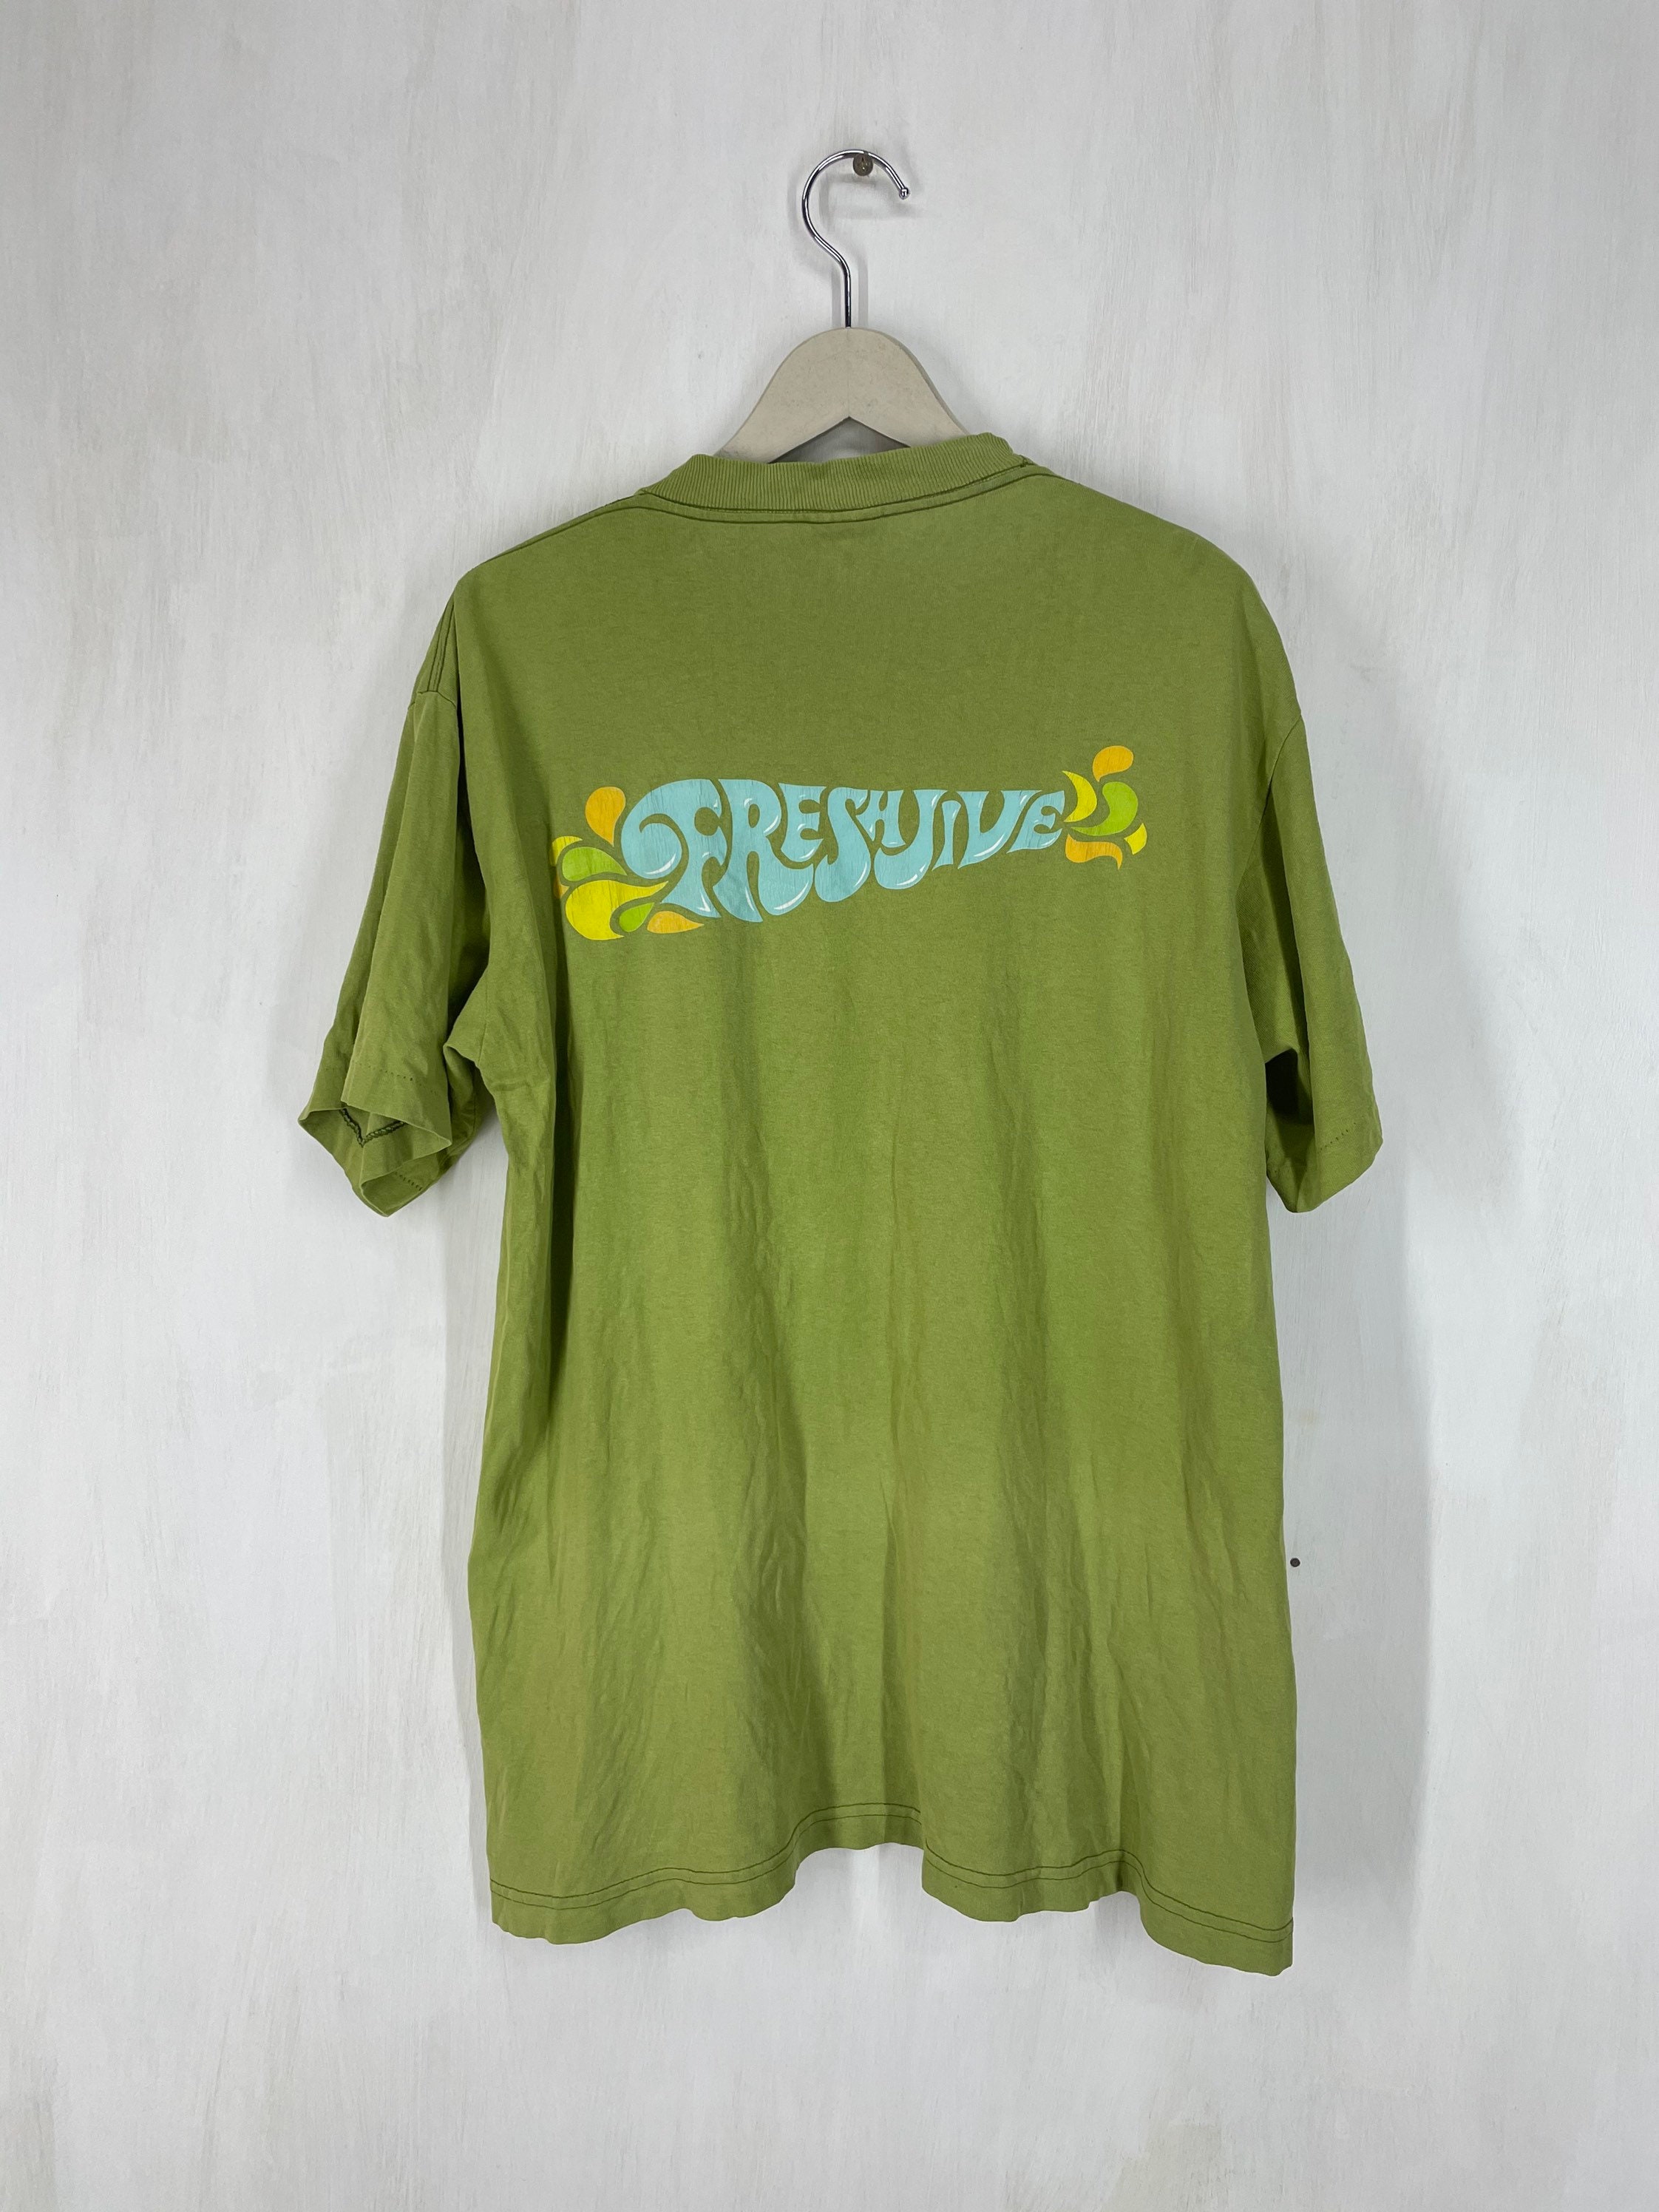 Vintage 90s Freshjive Streetwear Skateboard Skate T Shirt L